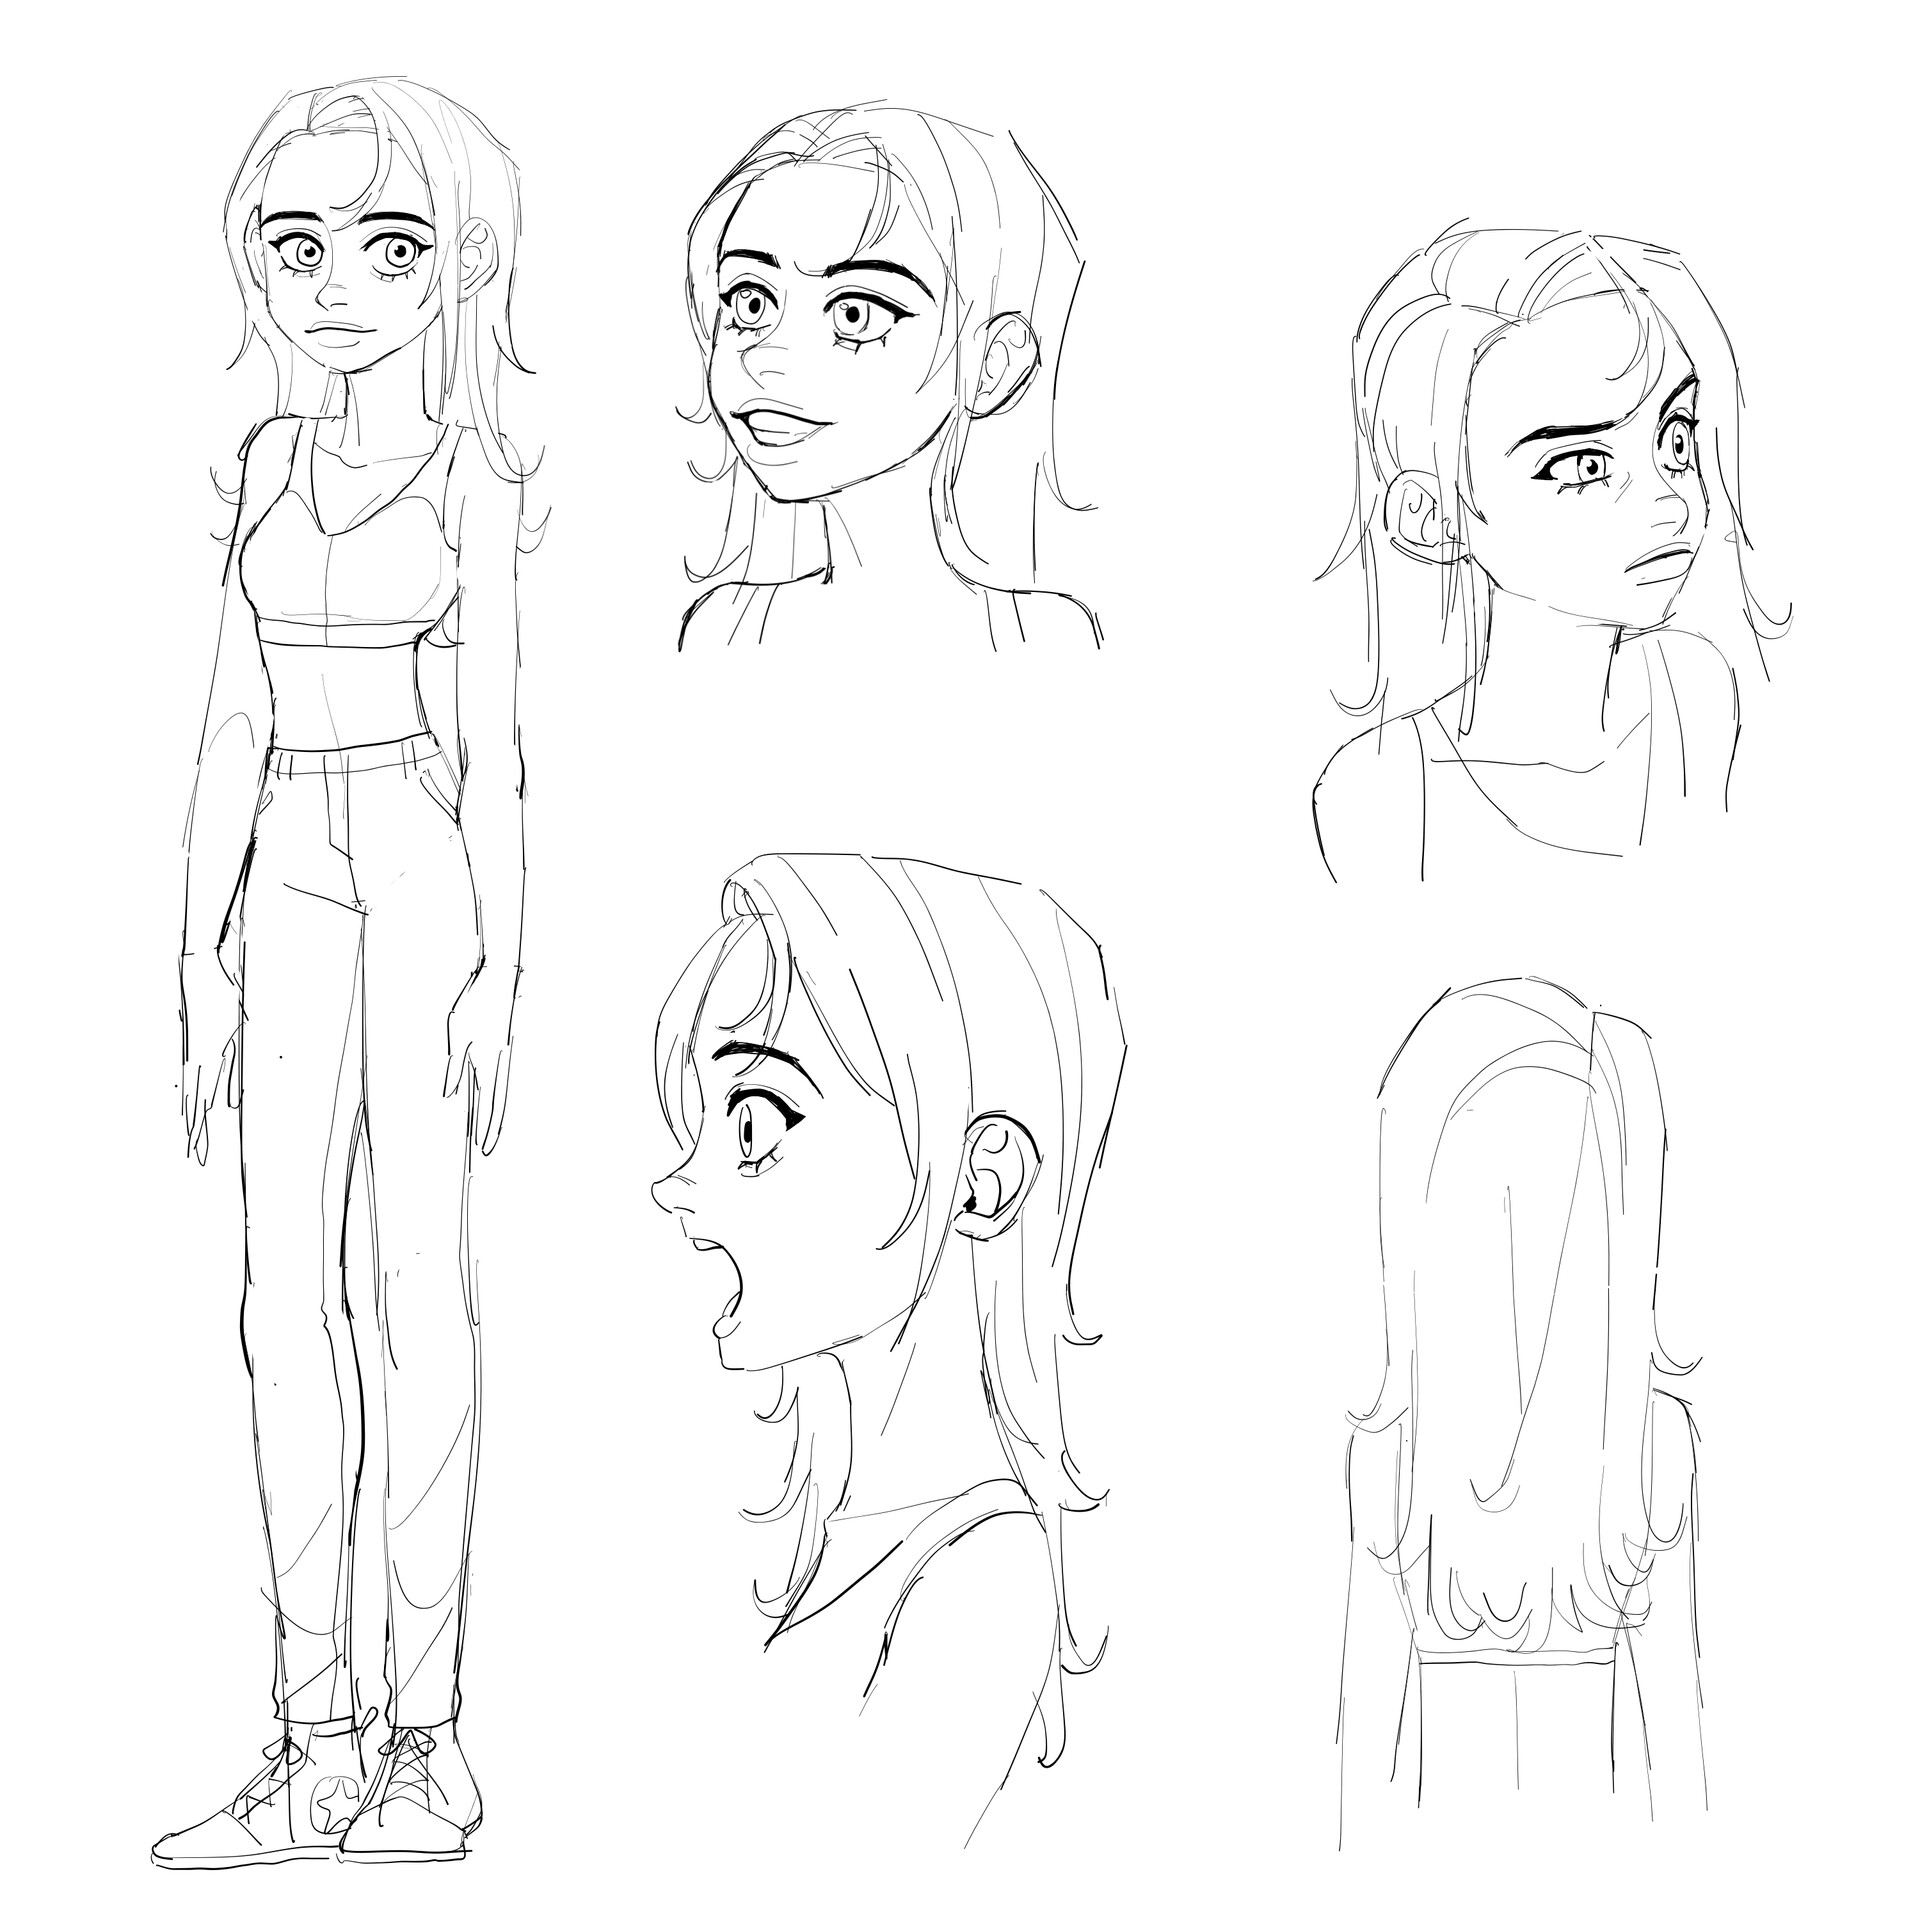 ArtStation - Casual girl character sheet sketch